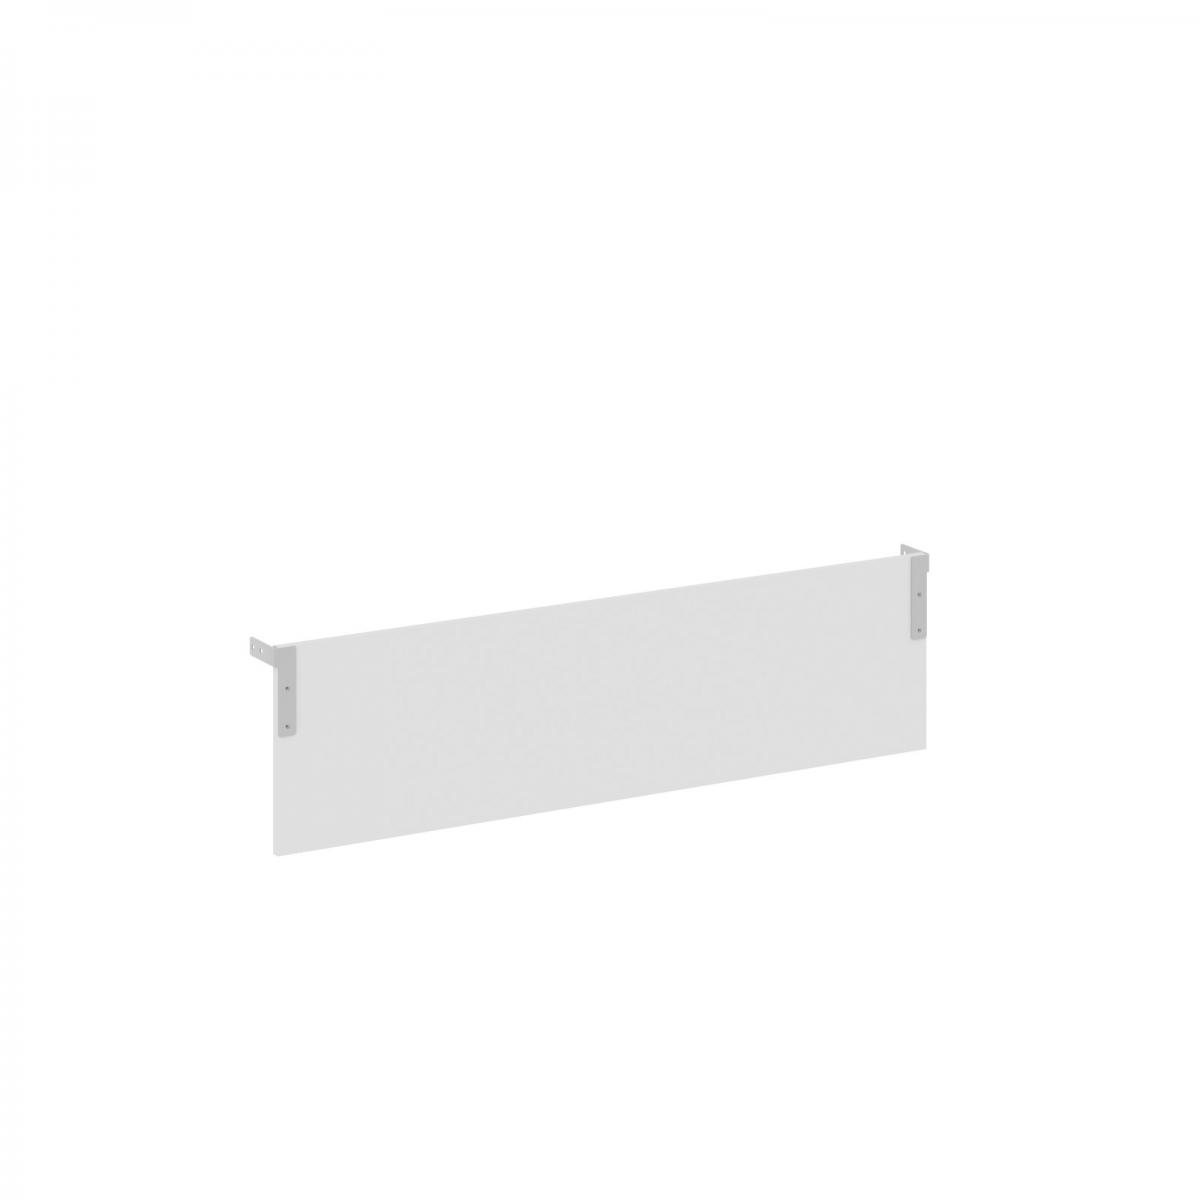 Фронтальная панель подвесная XDST 147 Белый/Алюминий 1300х350х18 XTEN-S